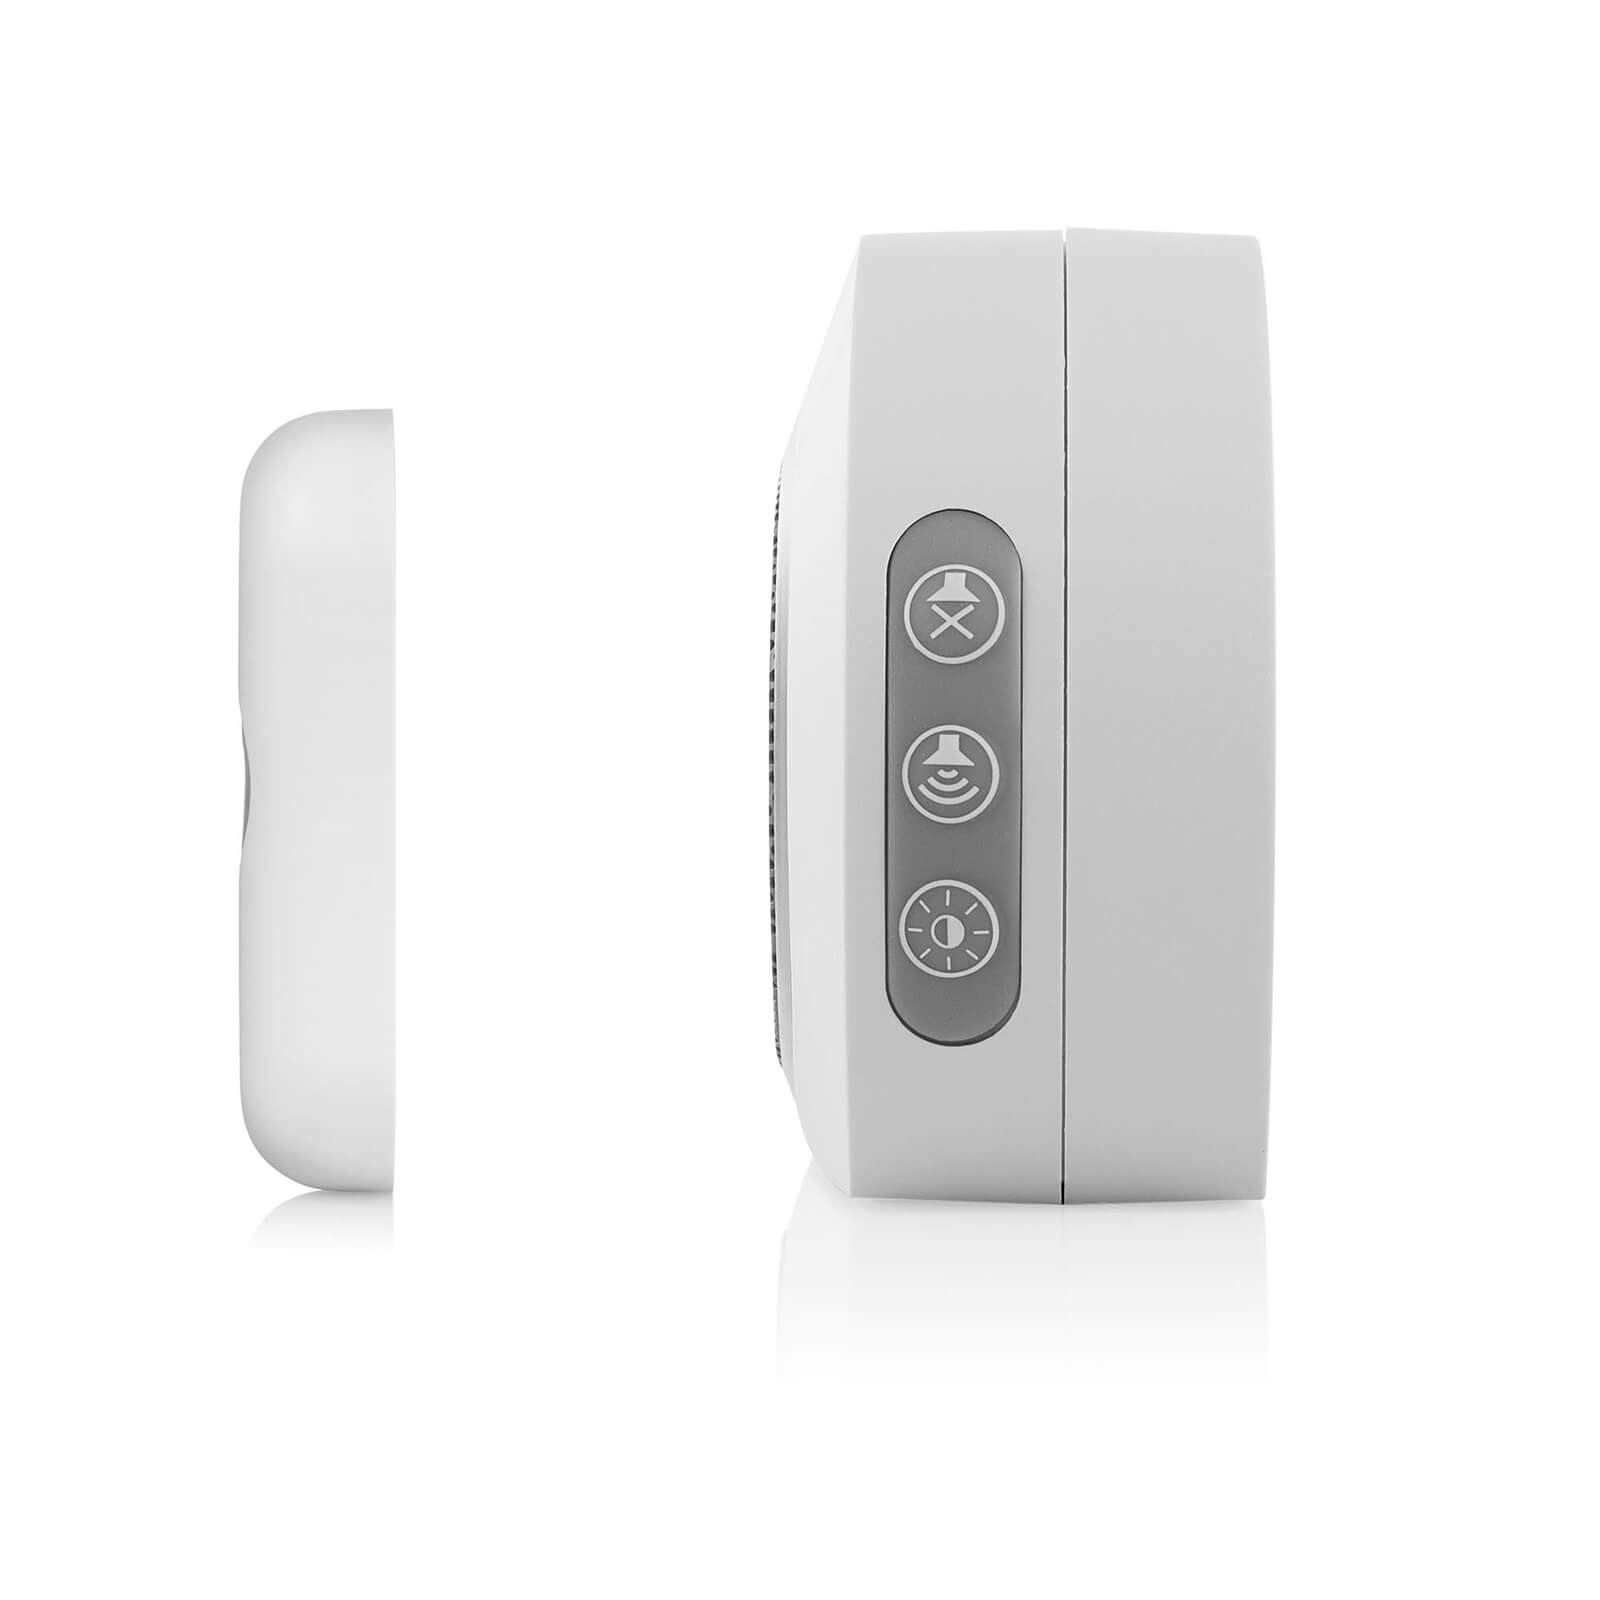 Byron 23521 175m Portable Wireless Doorbell set